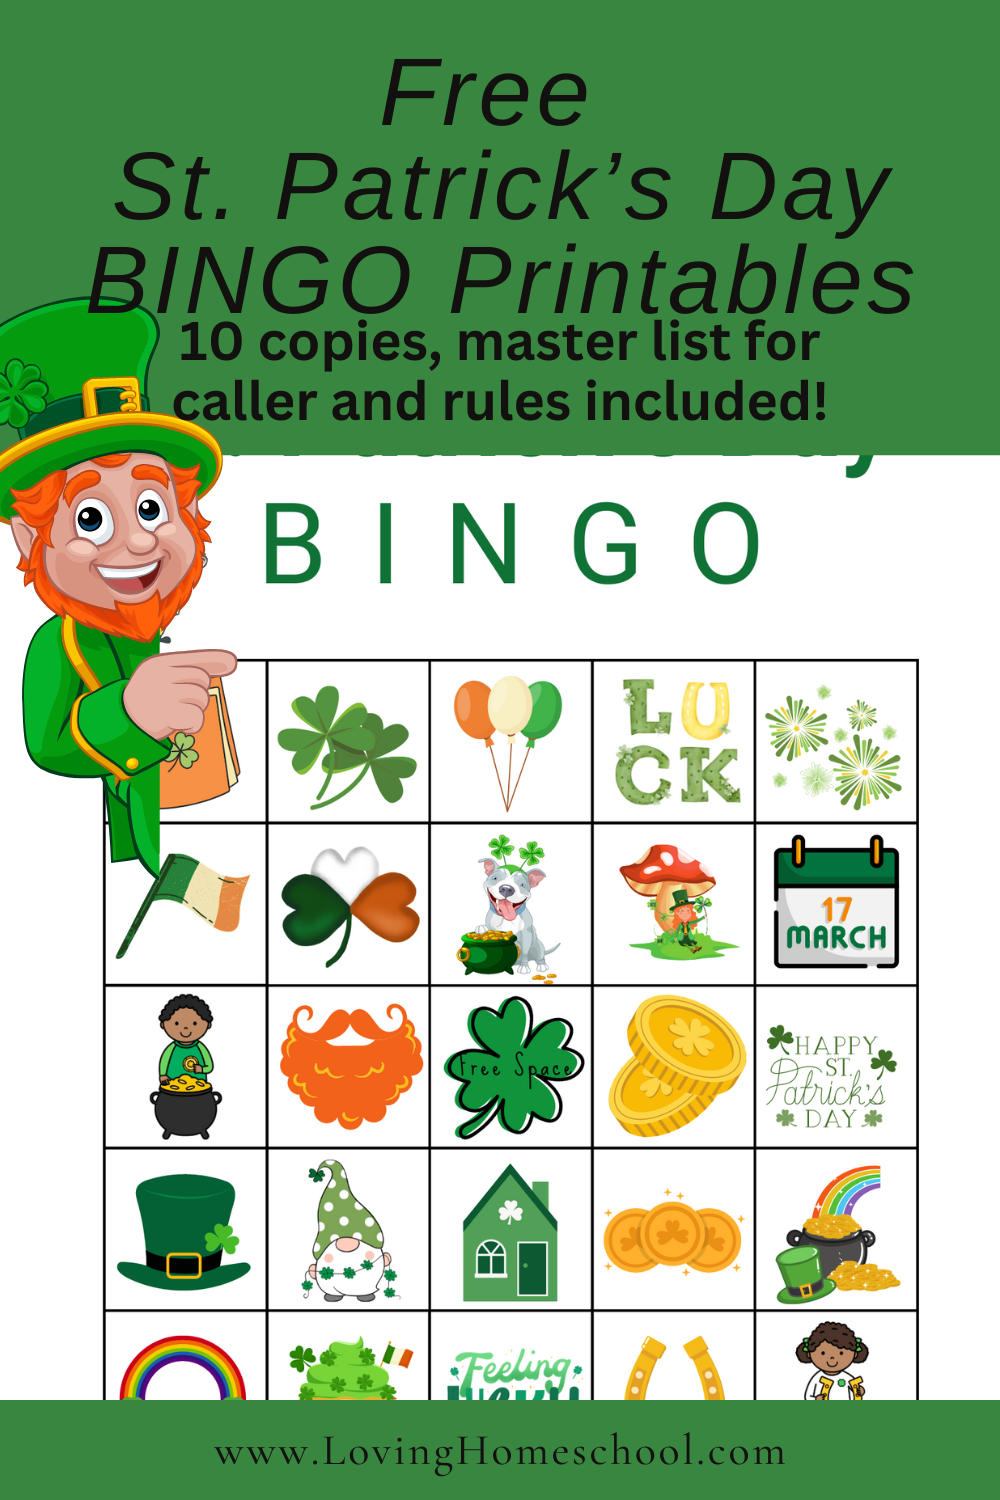 Free St. Patrick’s Day BINGO Printables Pinterest Pin